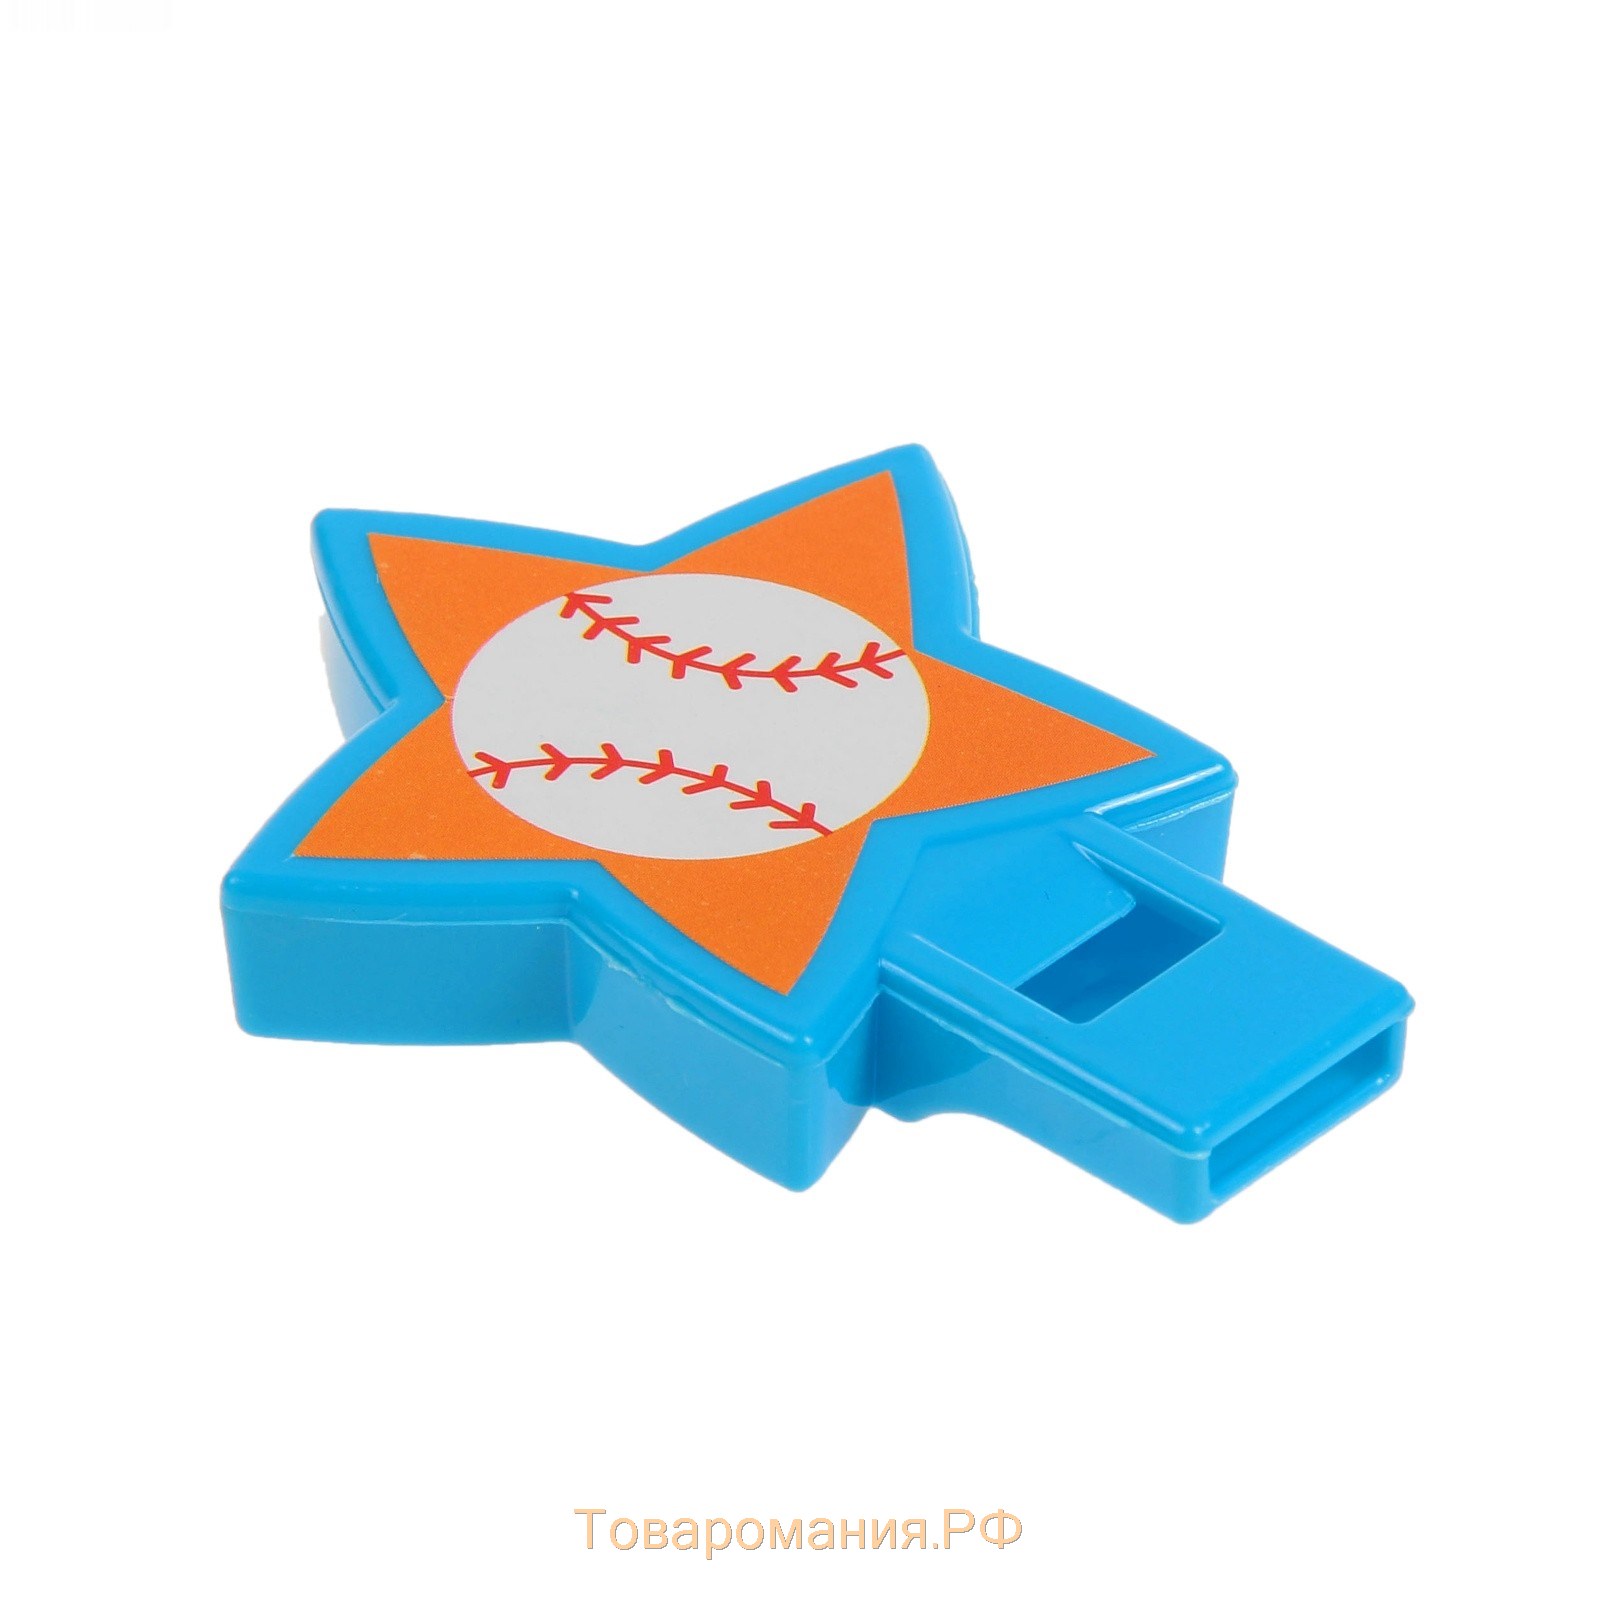 Набор свистков "Звездный спорт", (6 шт) цвета МИКС